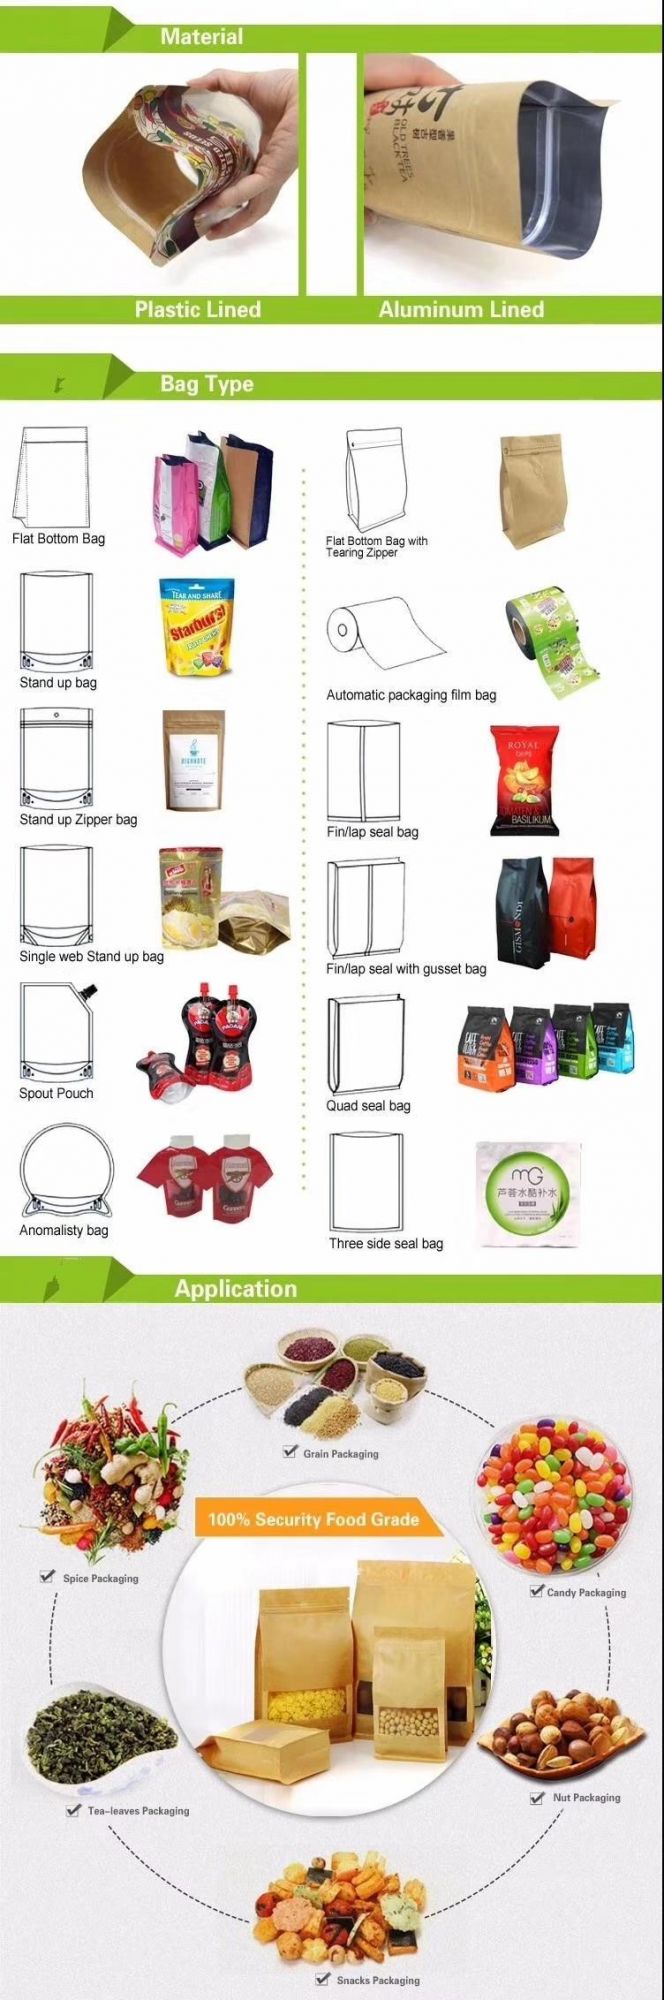 Food Packaging Bag with Clear PE Film Gravure Printing for Korean Foods